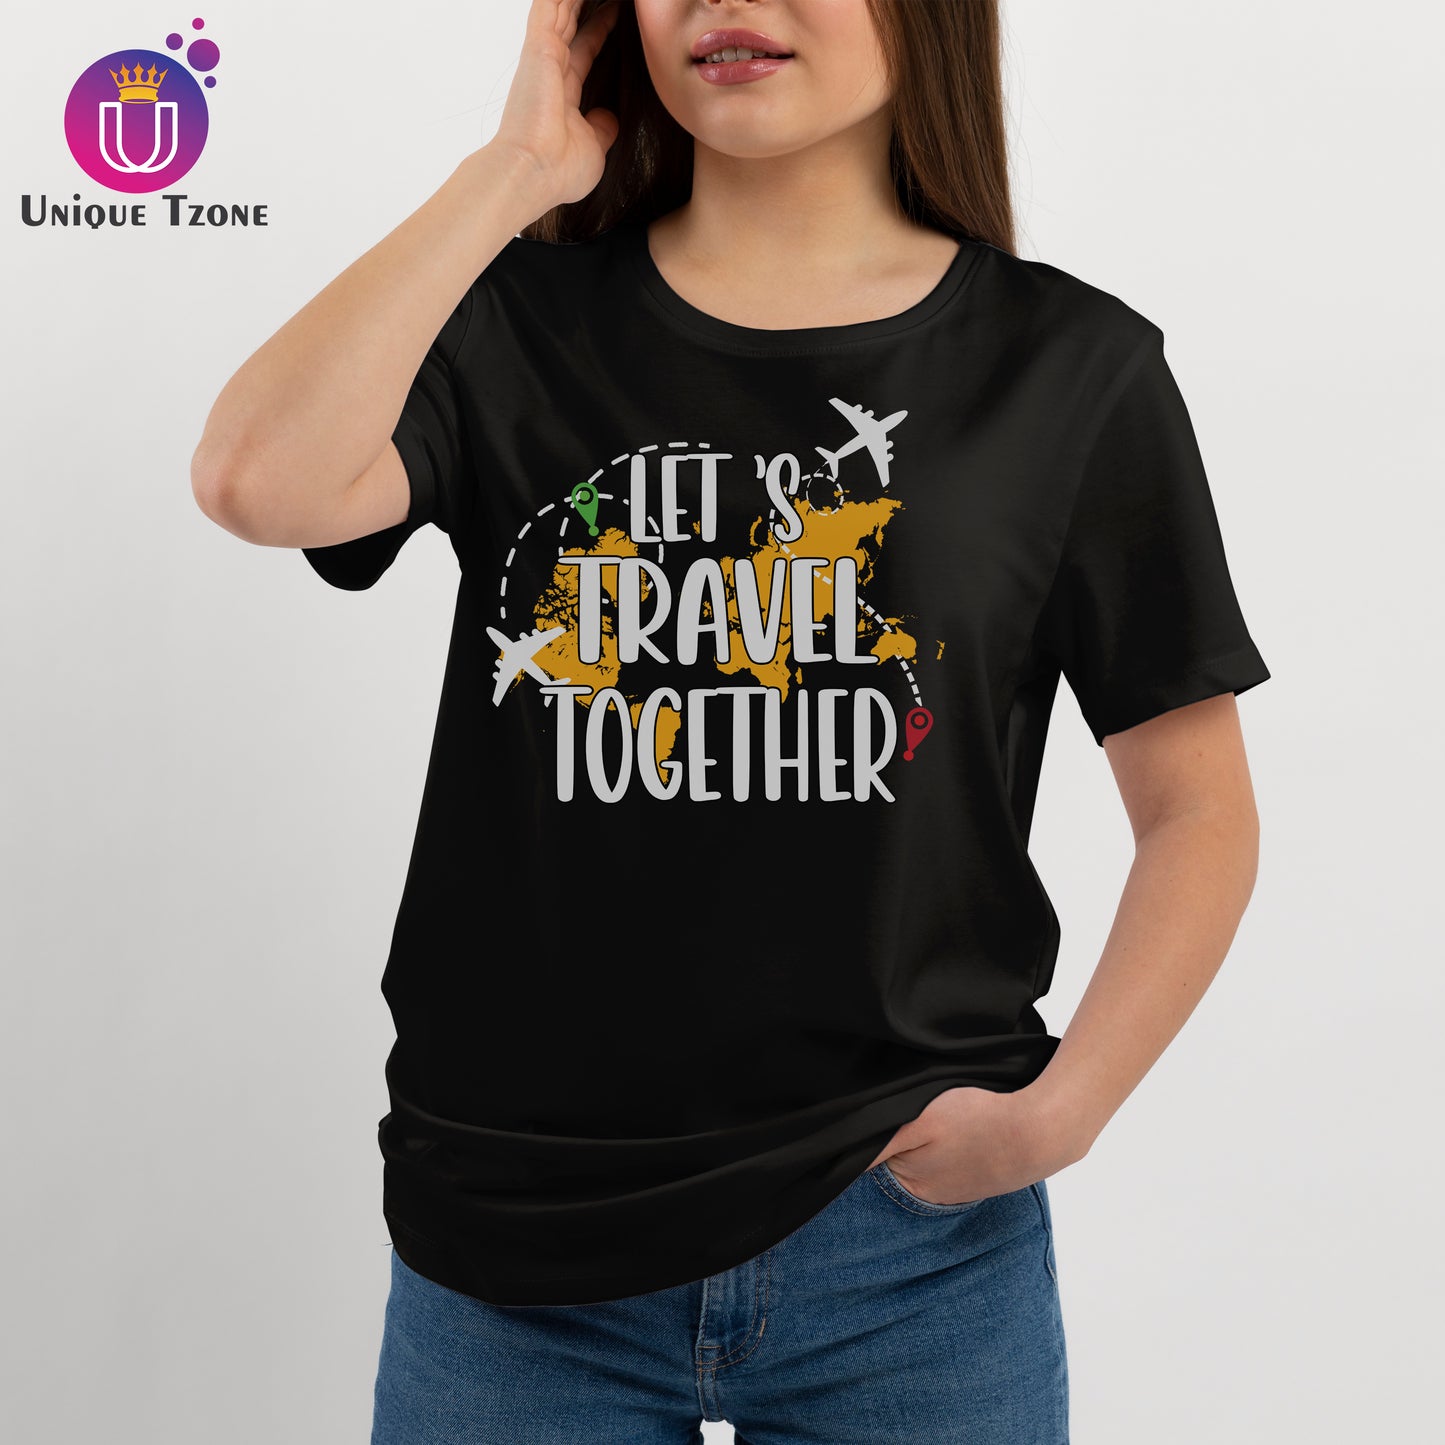 Let's Travel Together Black Round Neck Cotton T-shirt